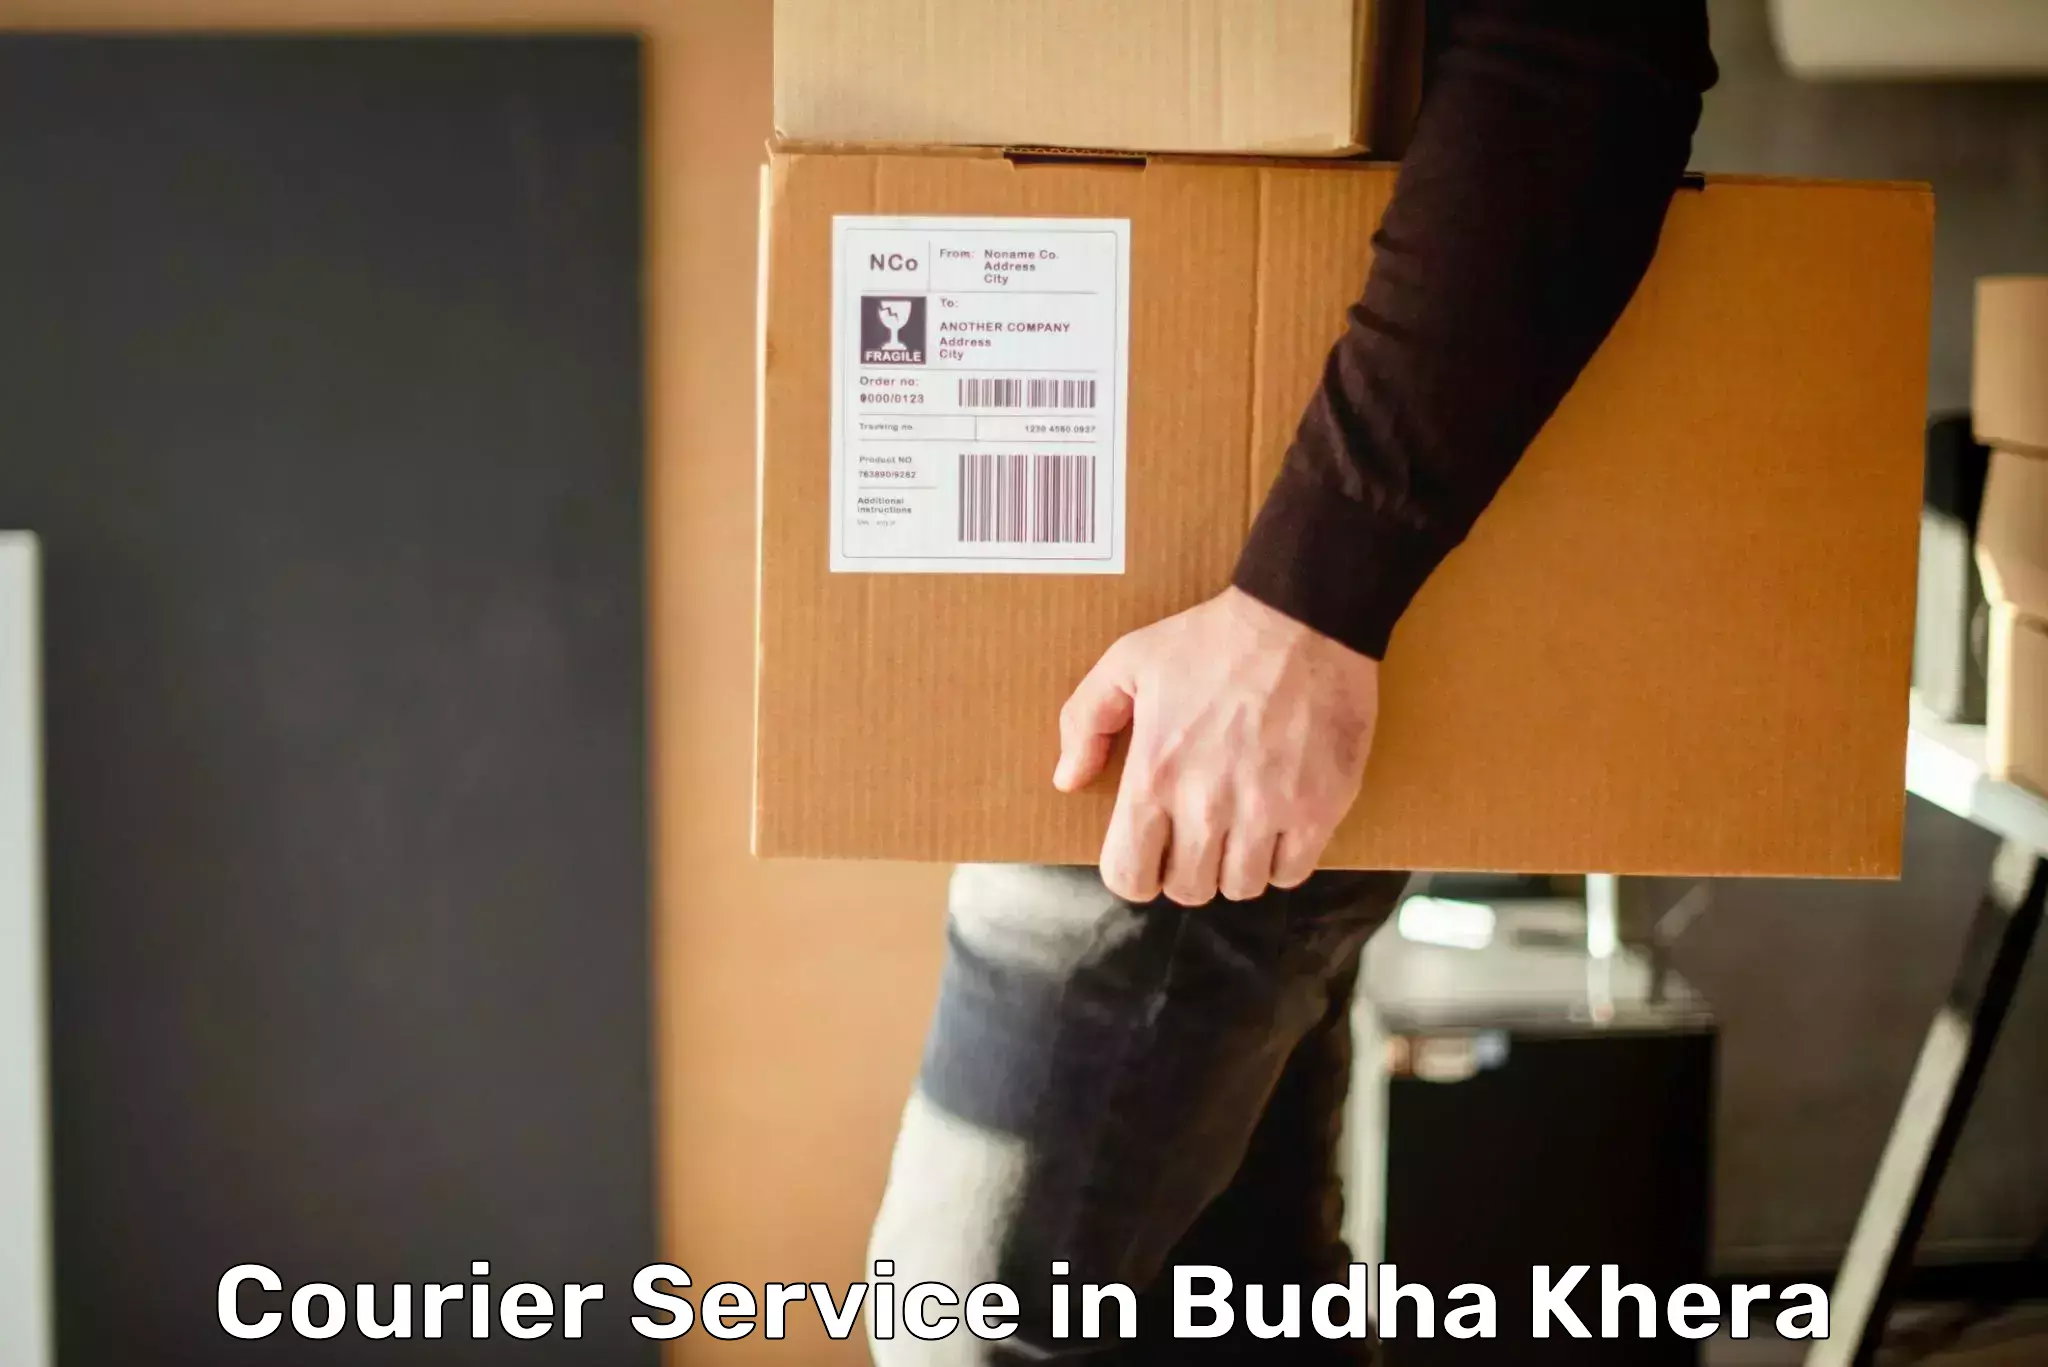 Doorstep delivery service in Budha Khera